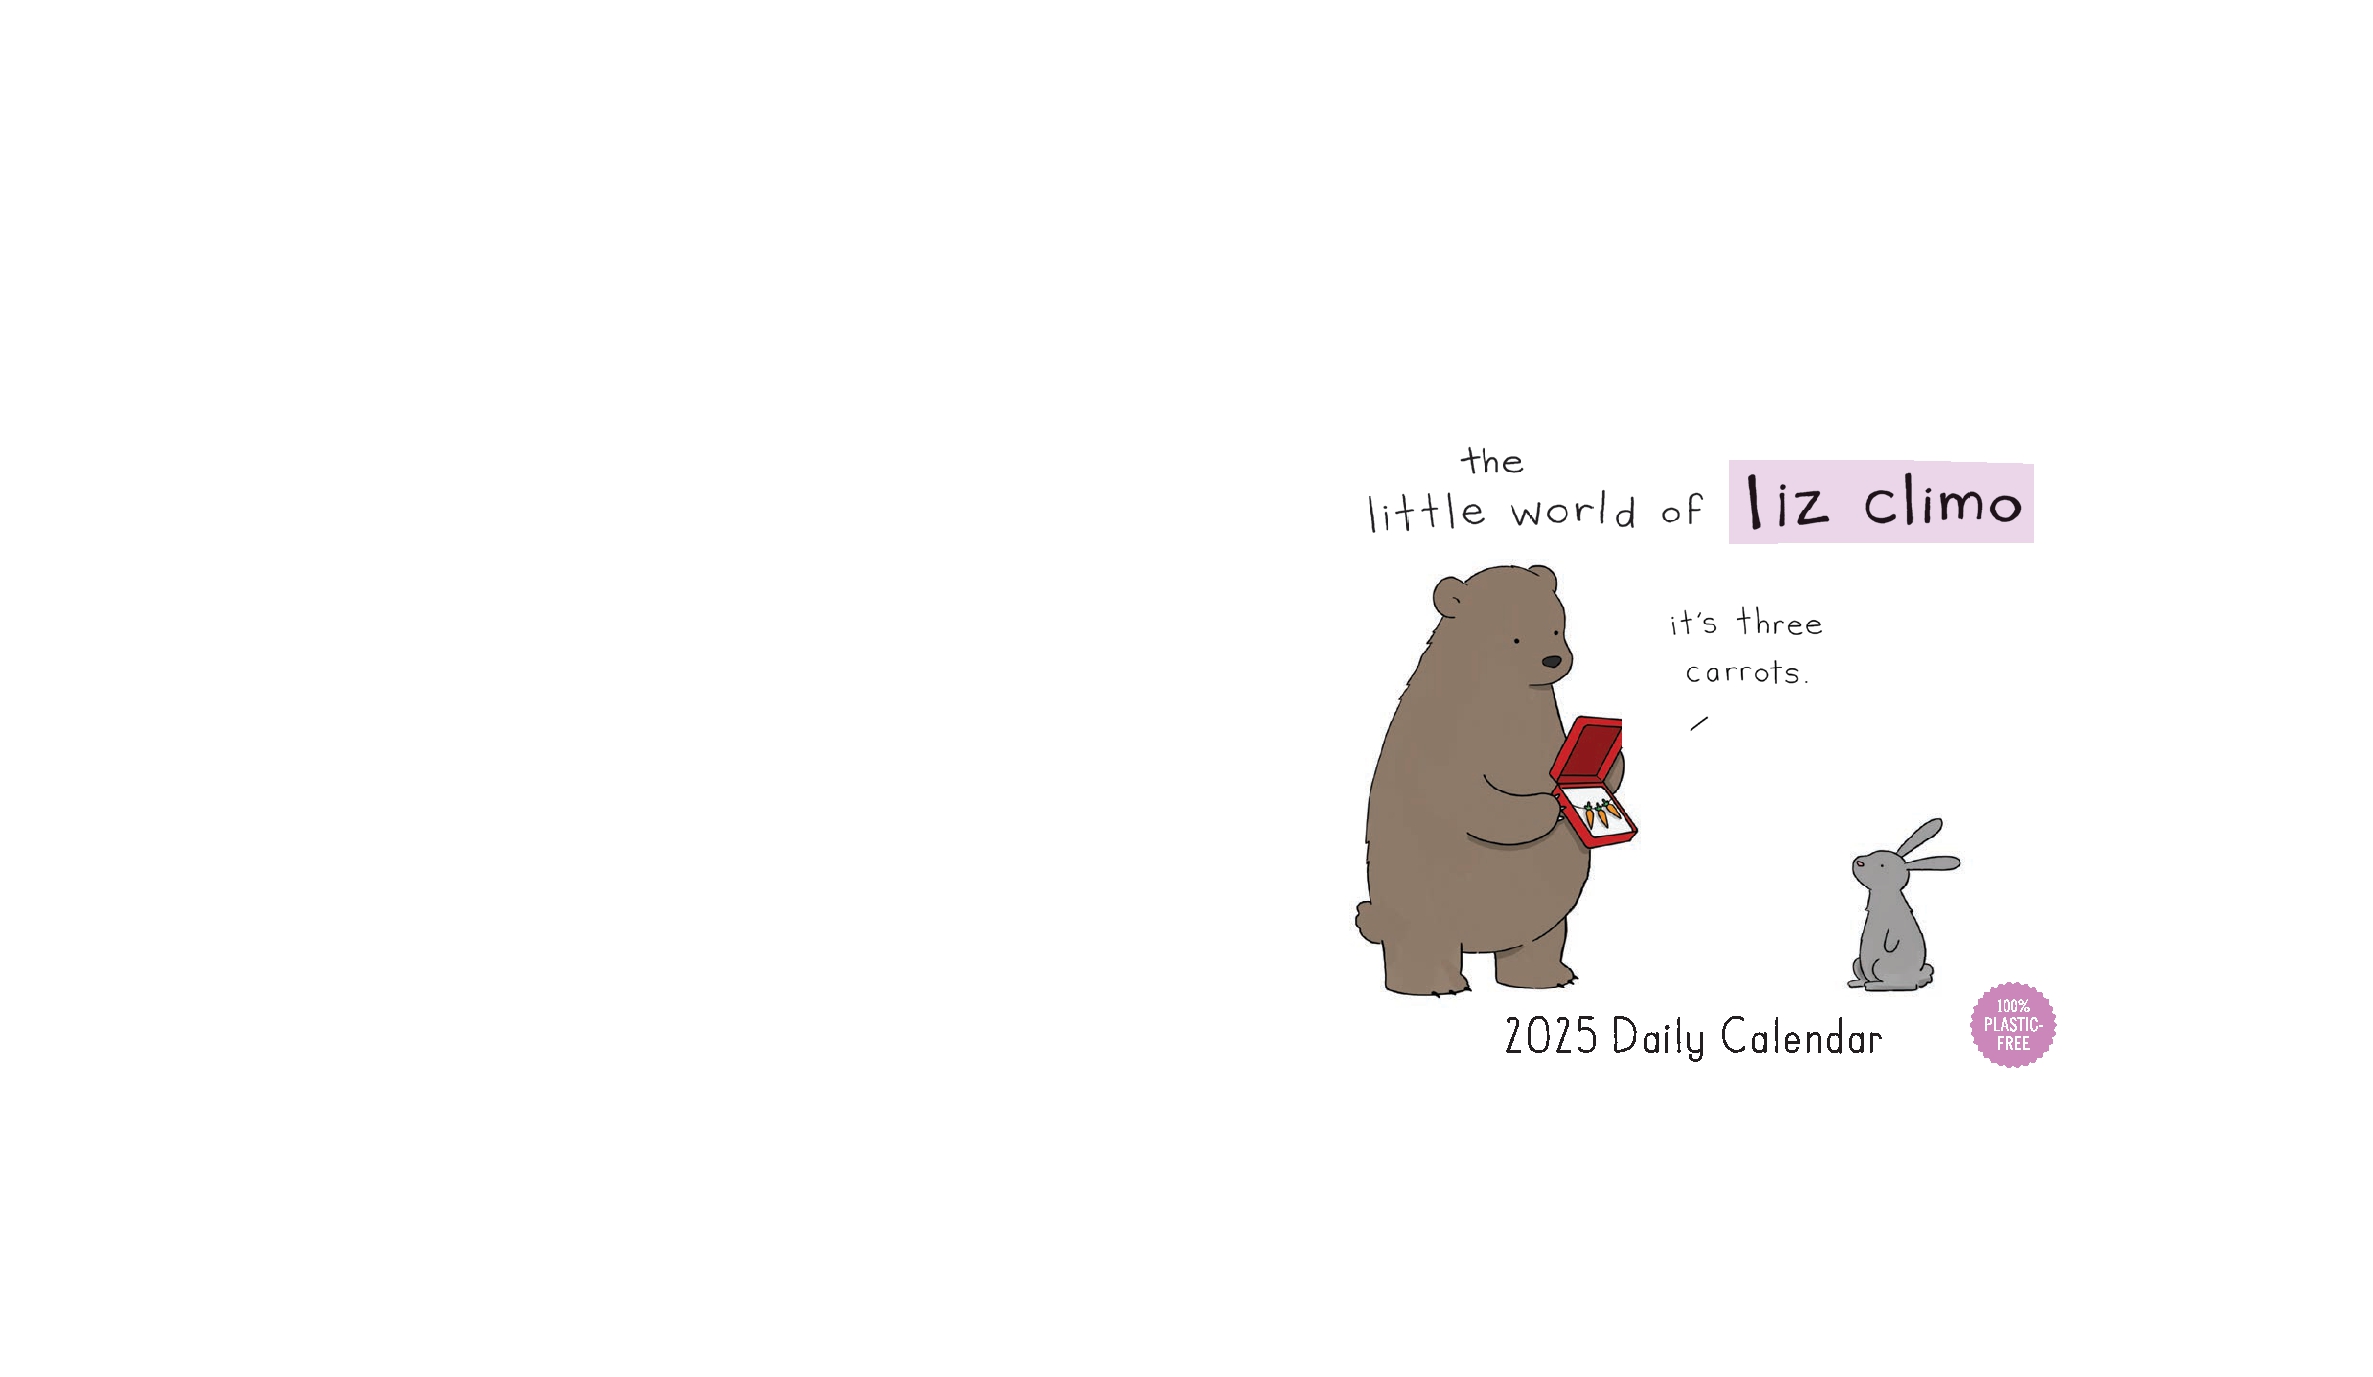 Little World of Liz Climo 2025 Daily Calendar